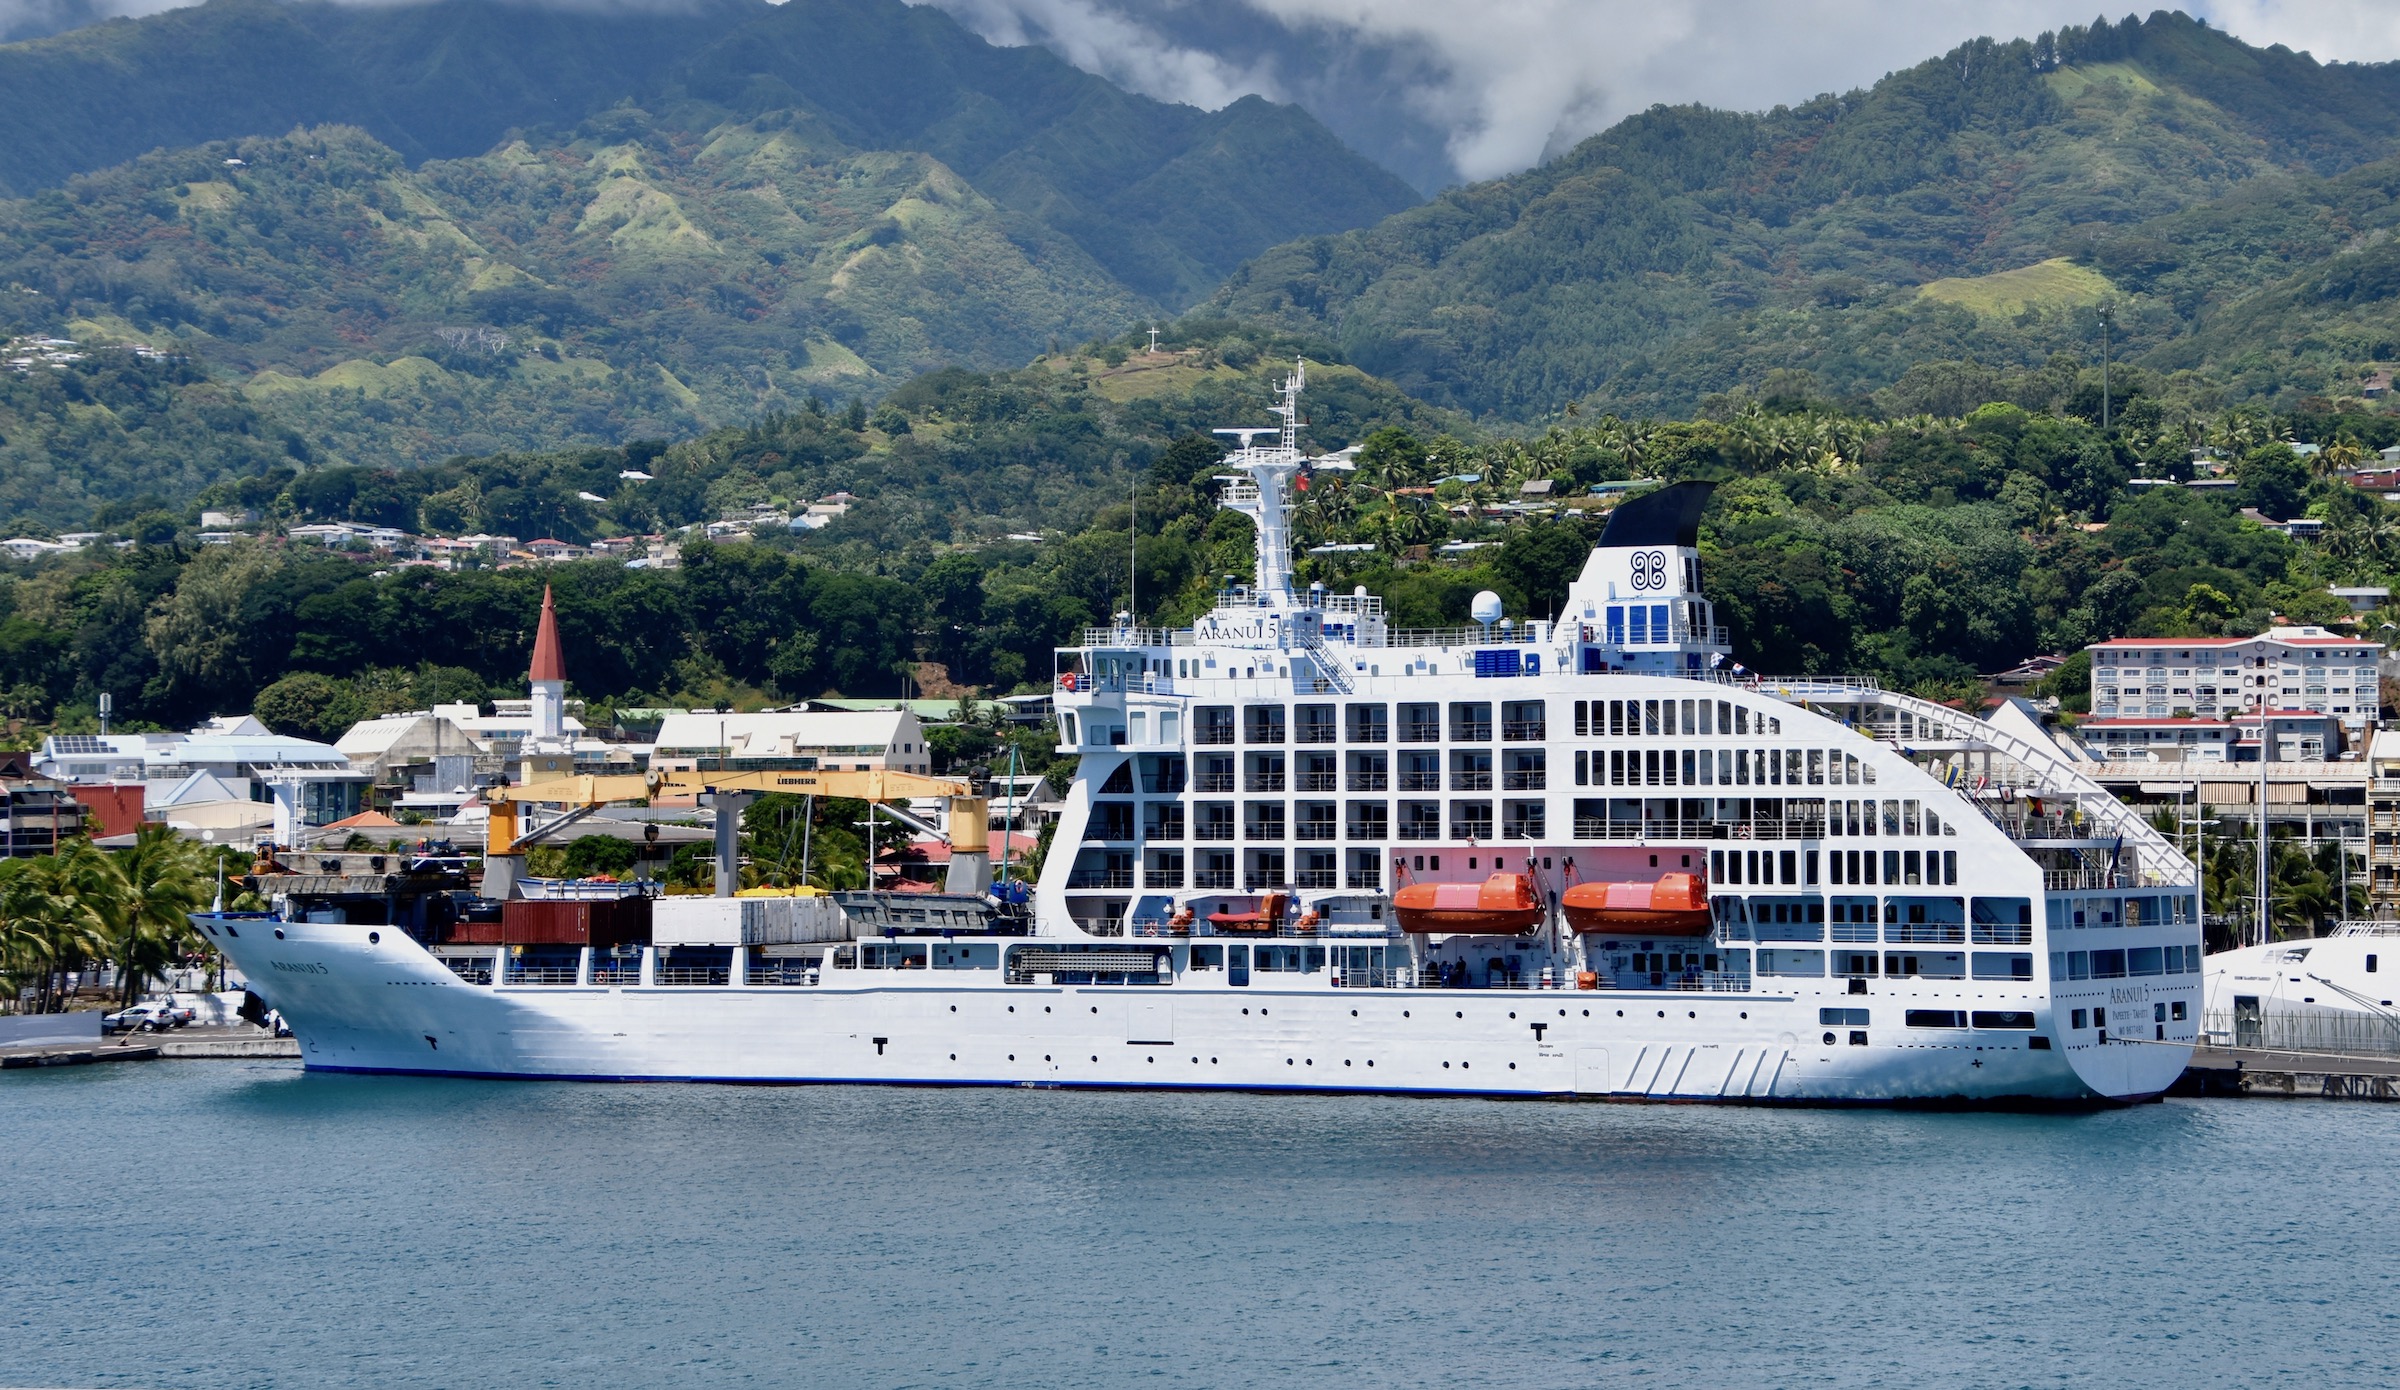 Aranui 5 sails to French Polynesia